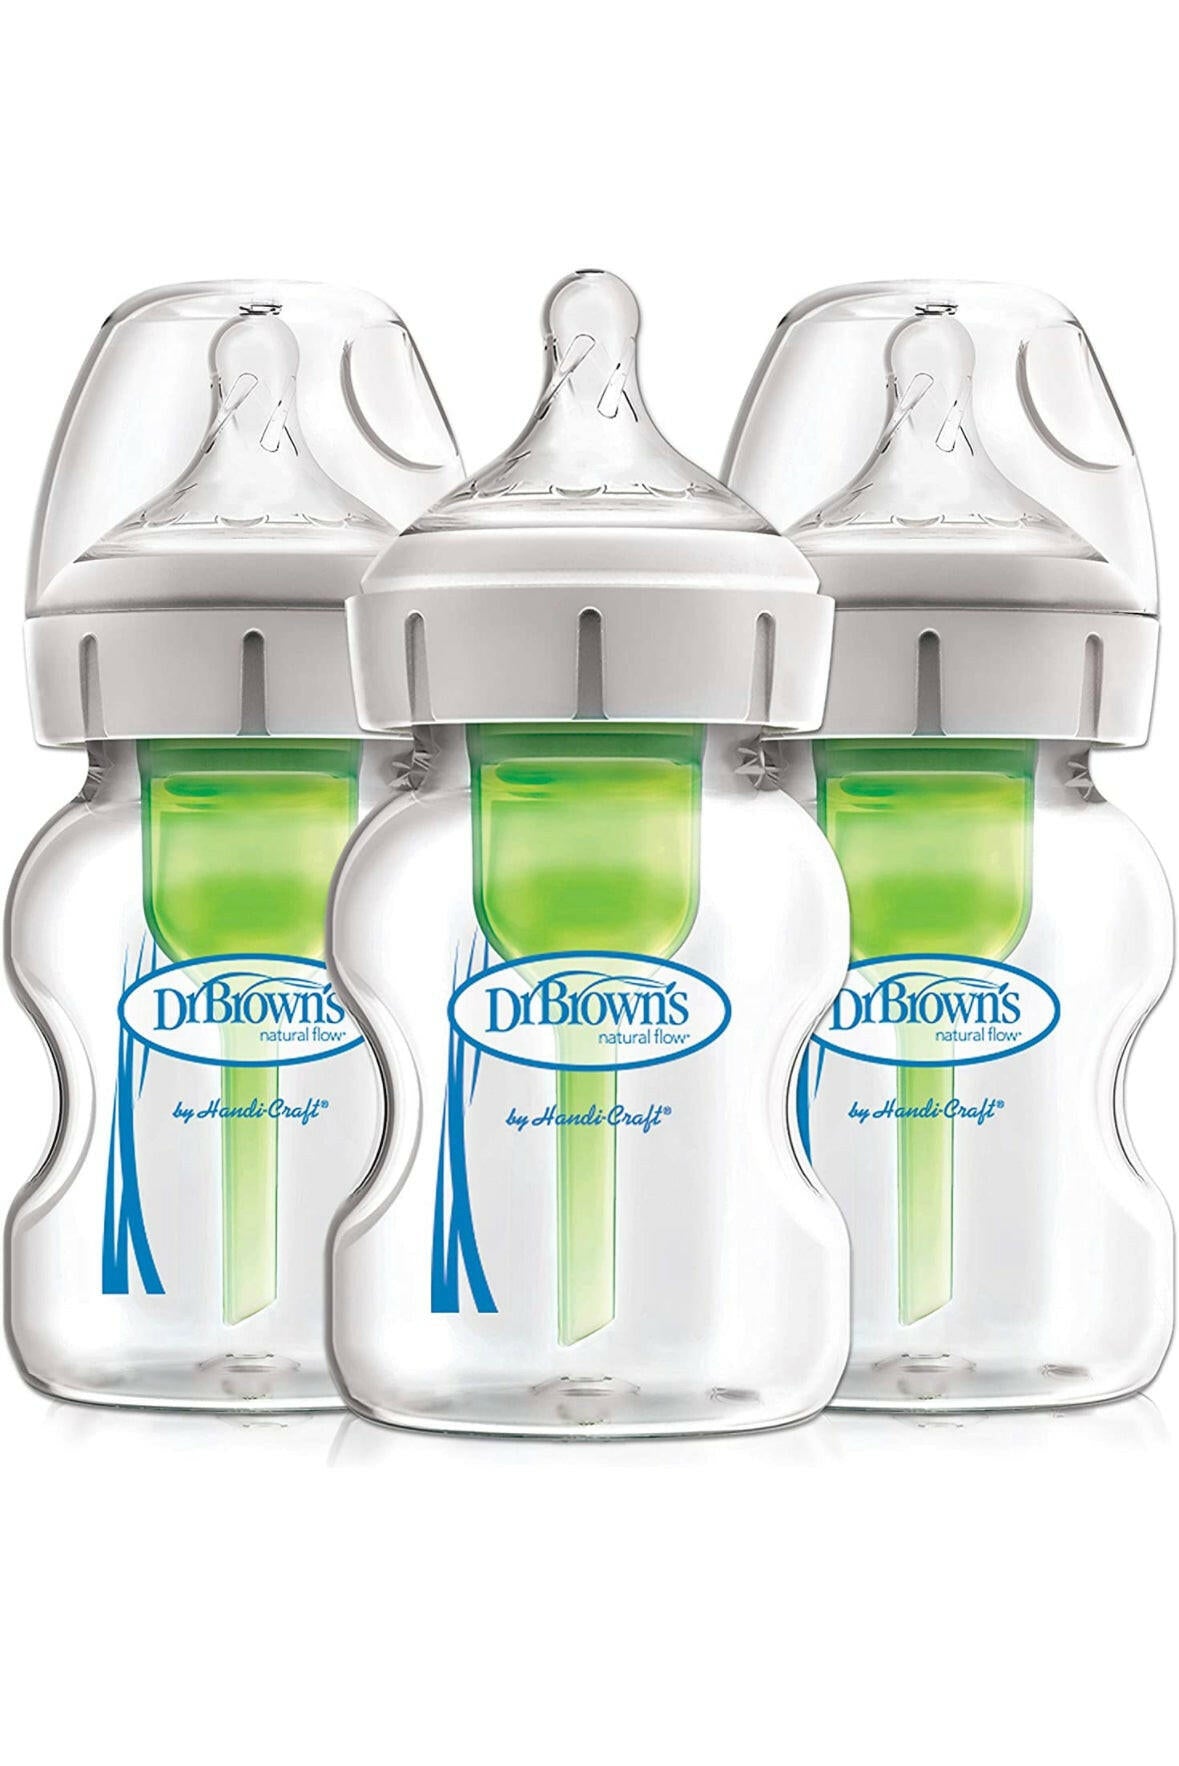 Dr. Brown’s Natural Flow, Wide-Neck Glass Baby Bottles 5 oz/150 mL - 3 Pack.